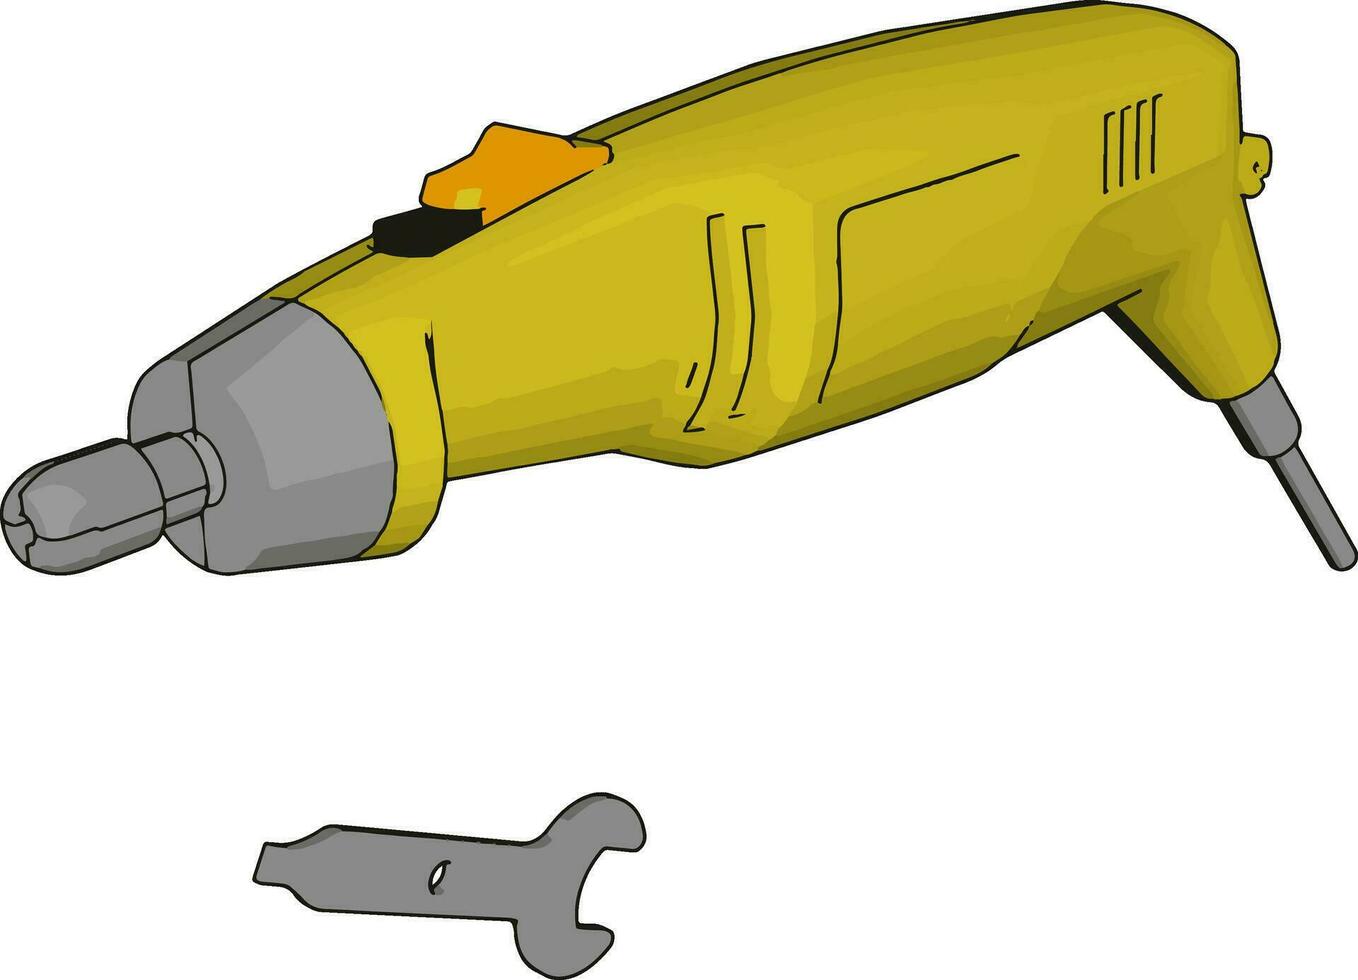 gul verktyg, illustration, vektor på vit bakgrund.